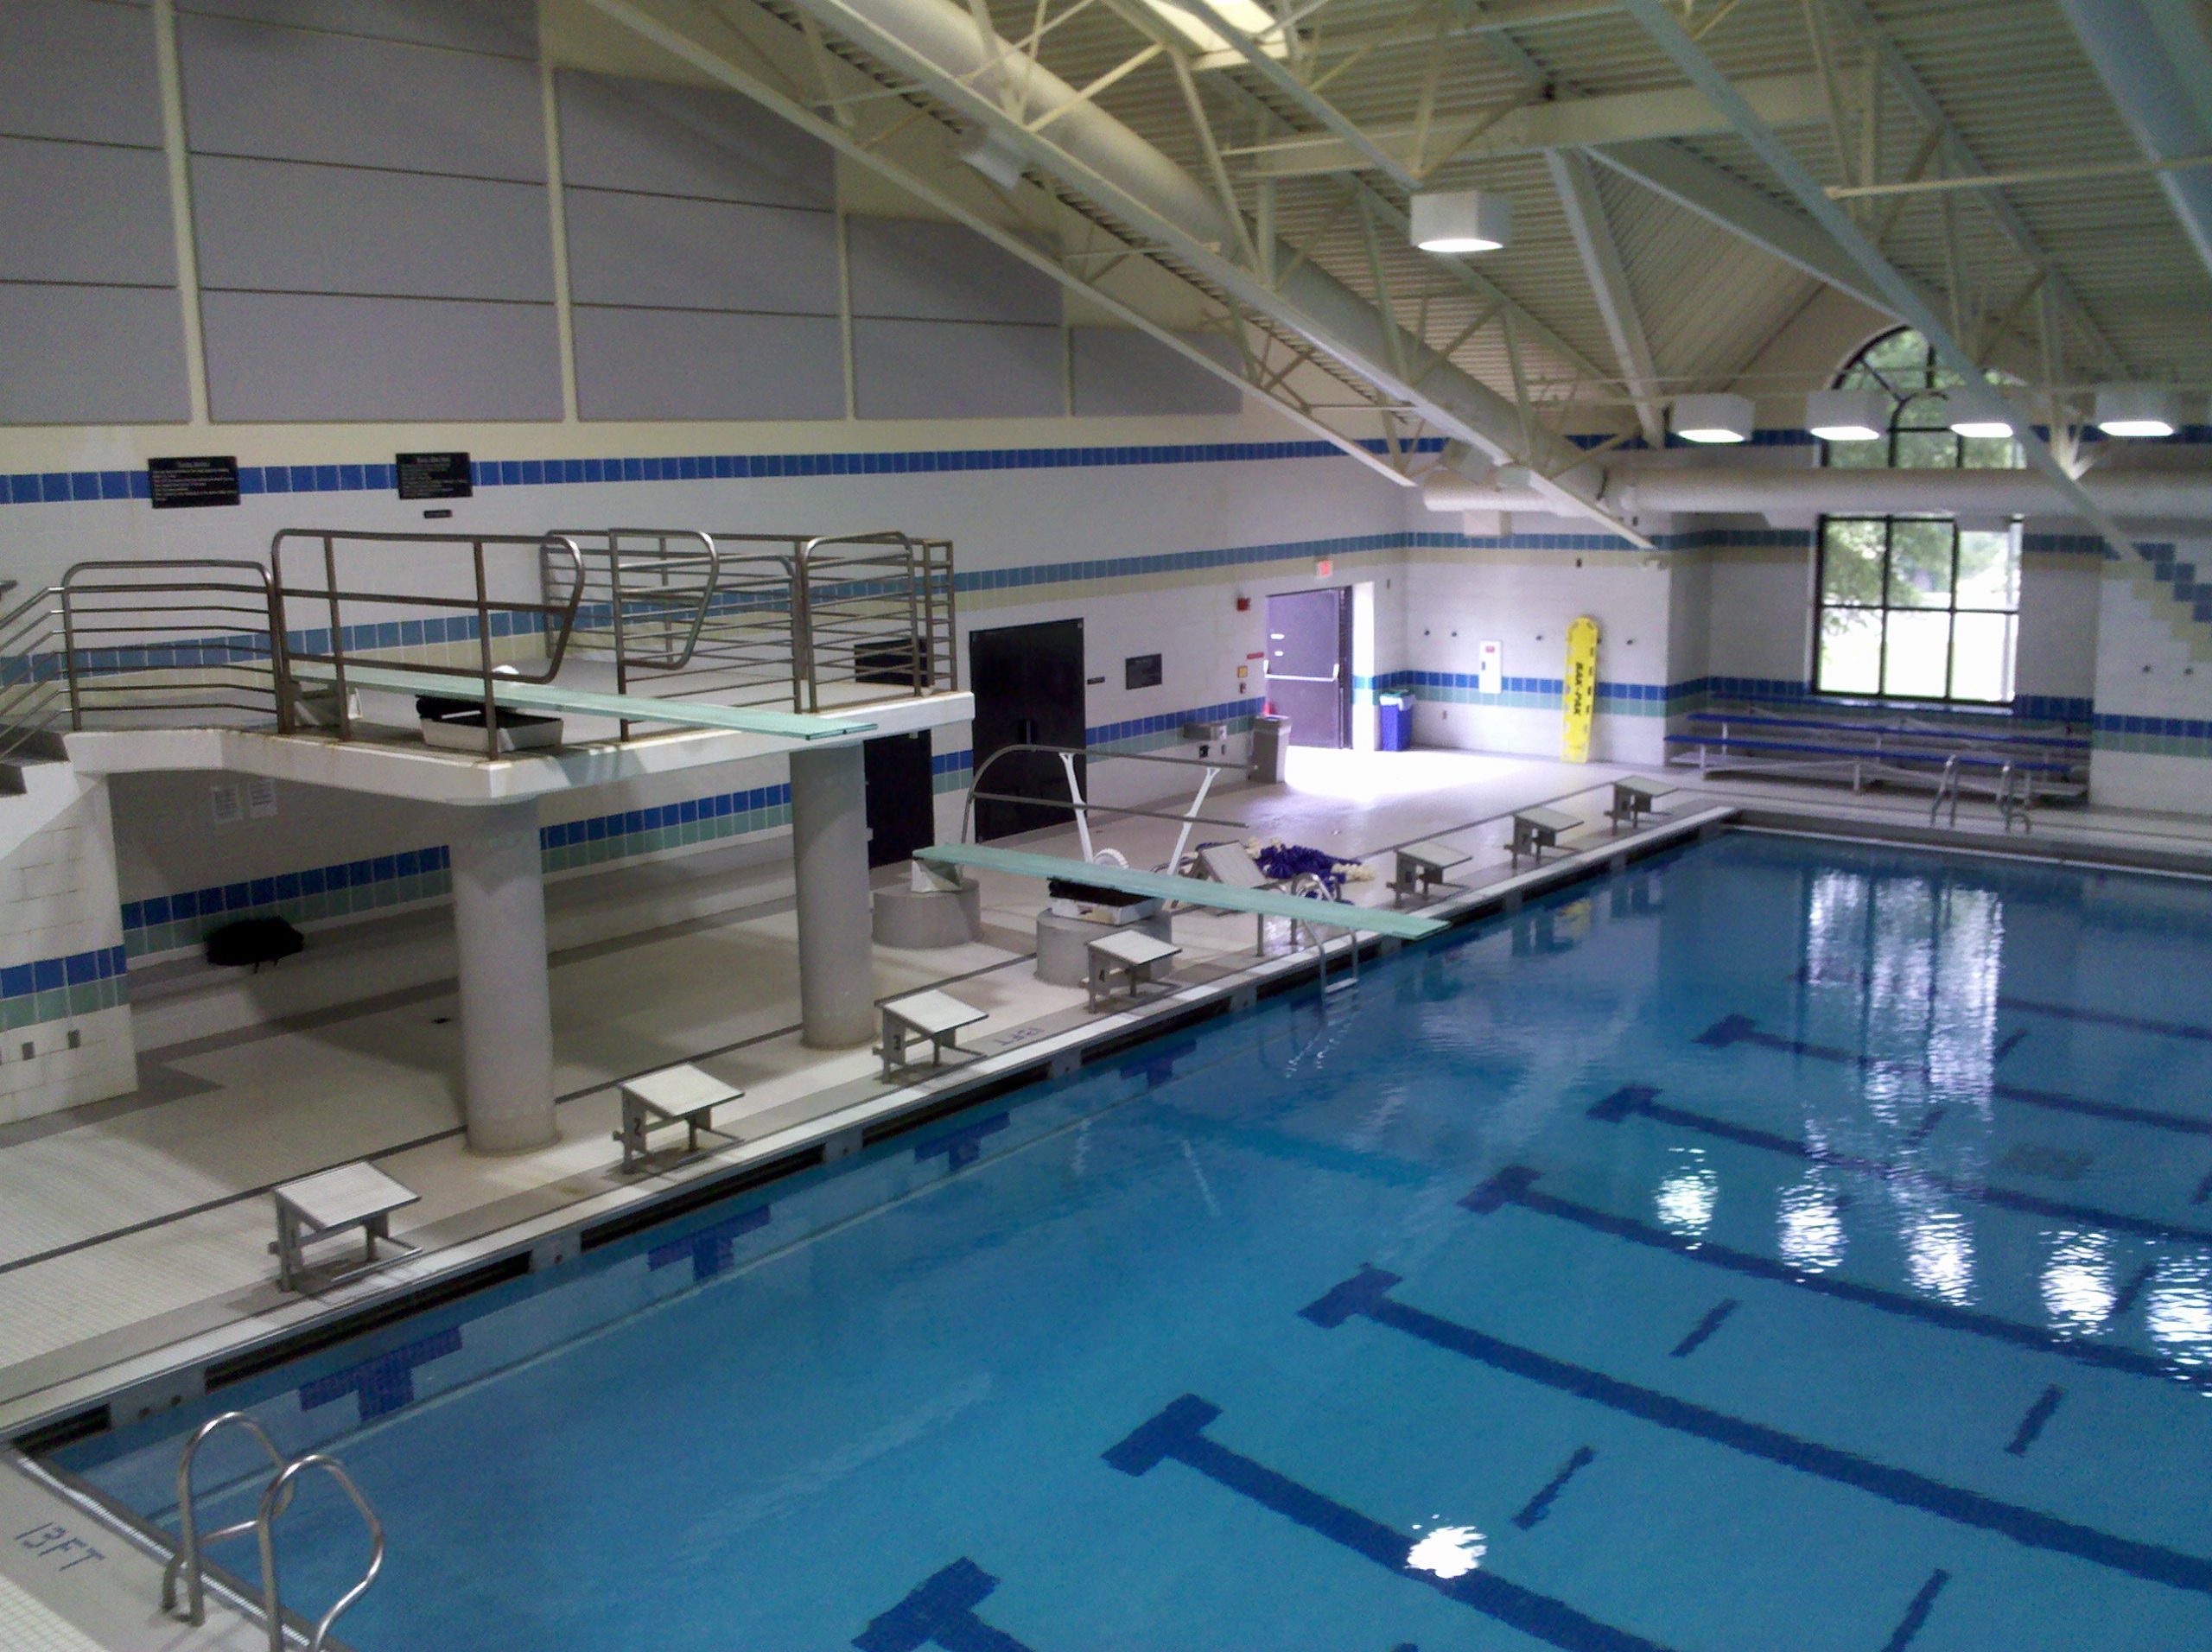 Olney Indoor Swim Center Our Kids